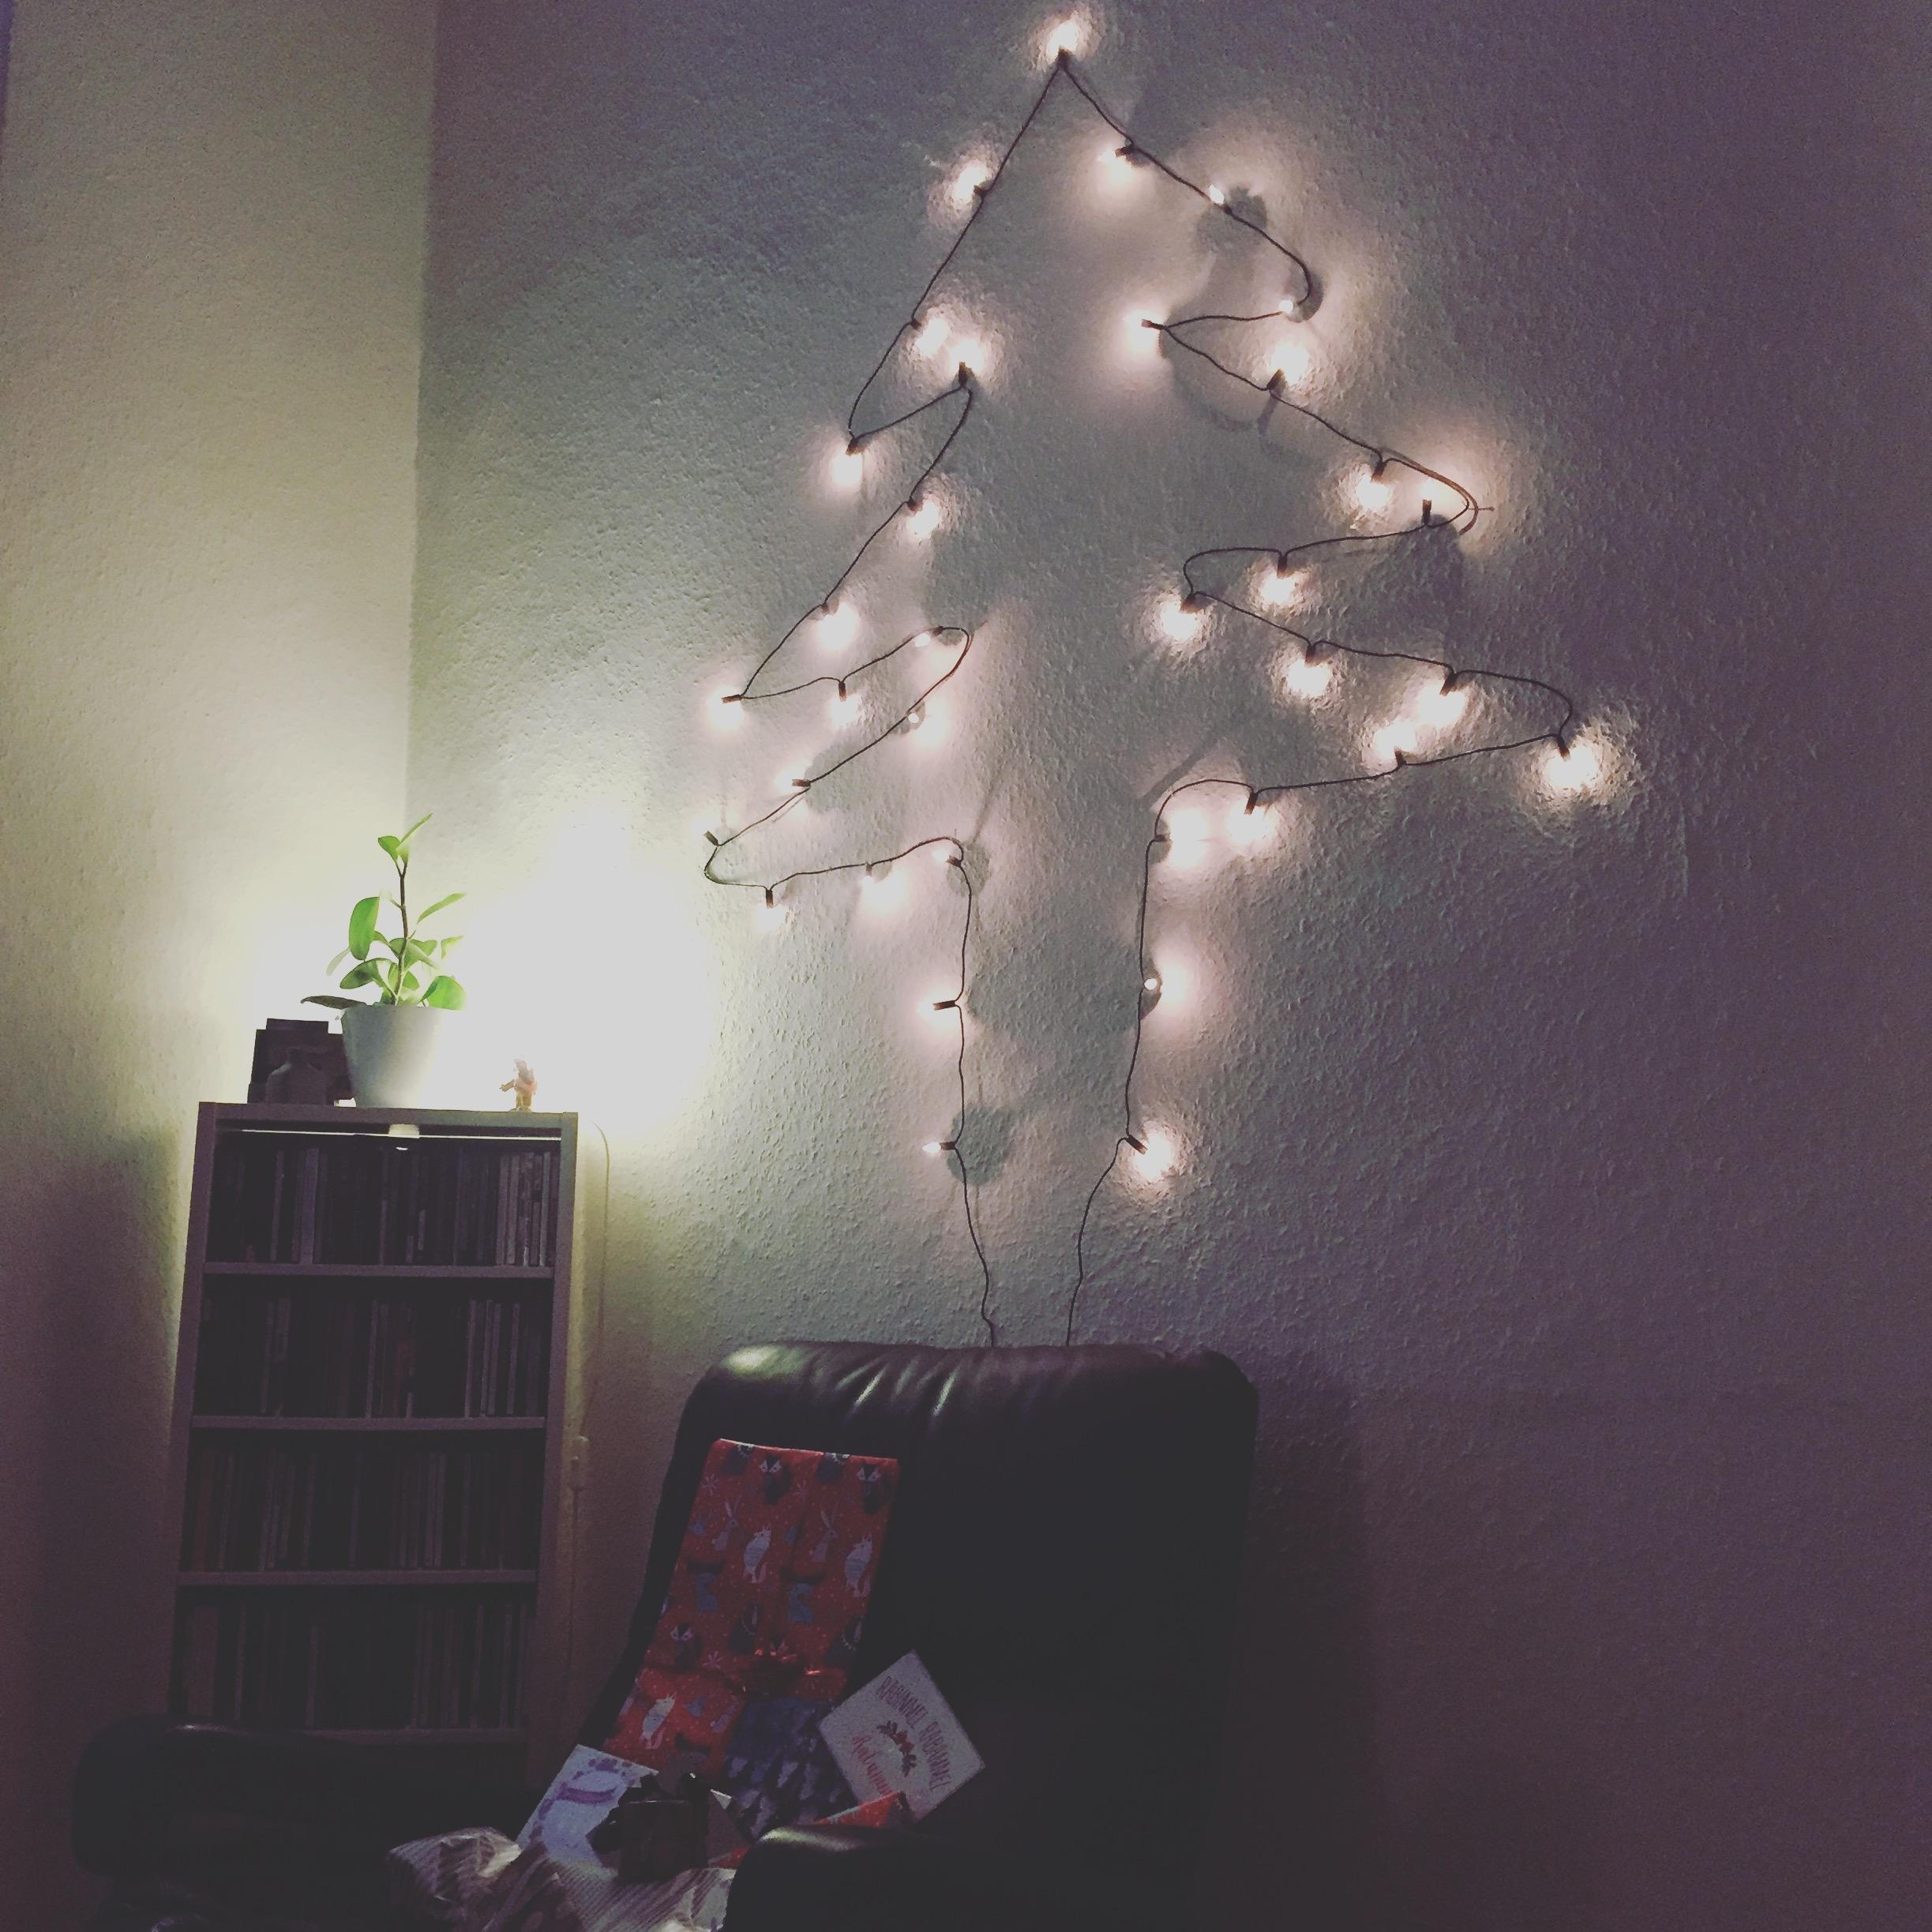 last minute weihnachtsbaum.
#diy #christmastree #happyholidays #selfmade 